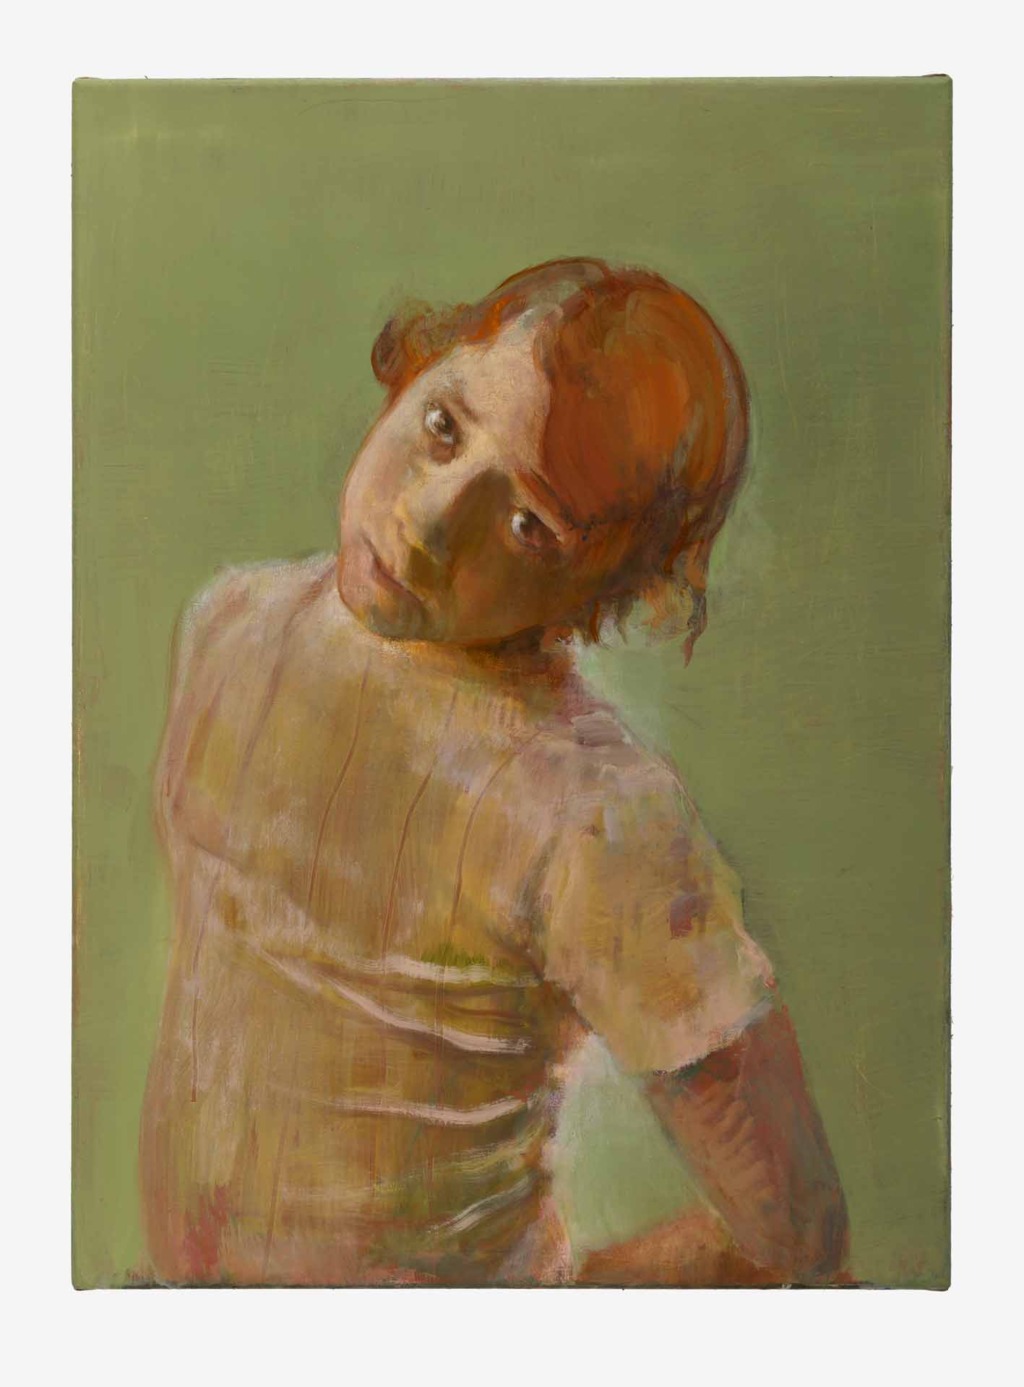 Gabi Hamm
Untitled #1, 2020
58 x 42 cm
Oil on canvas